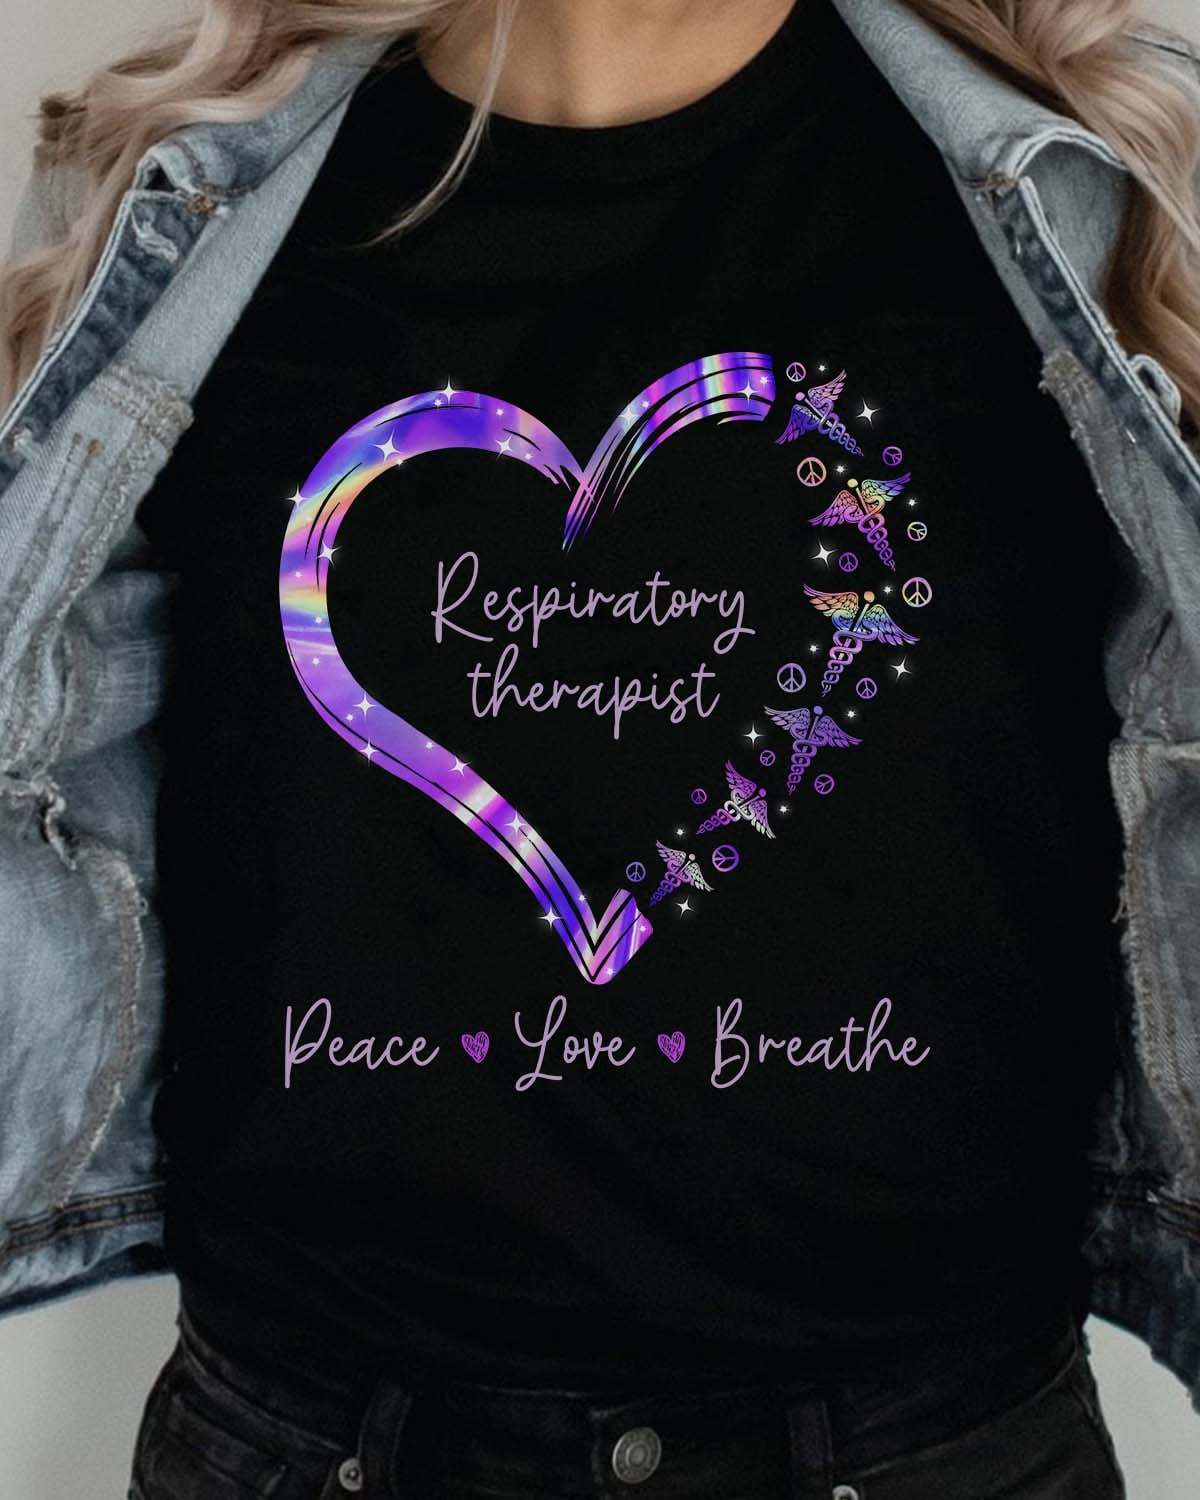 Respiratory therapist - Peace love breathe, respiratory therapist job